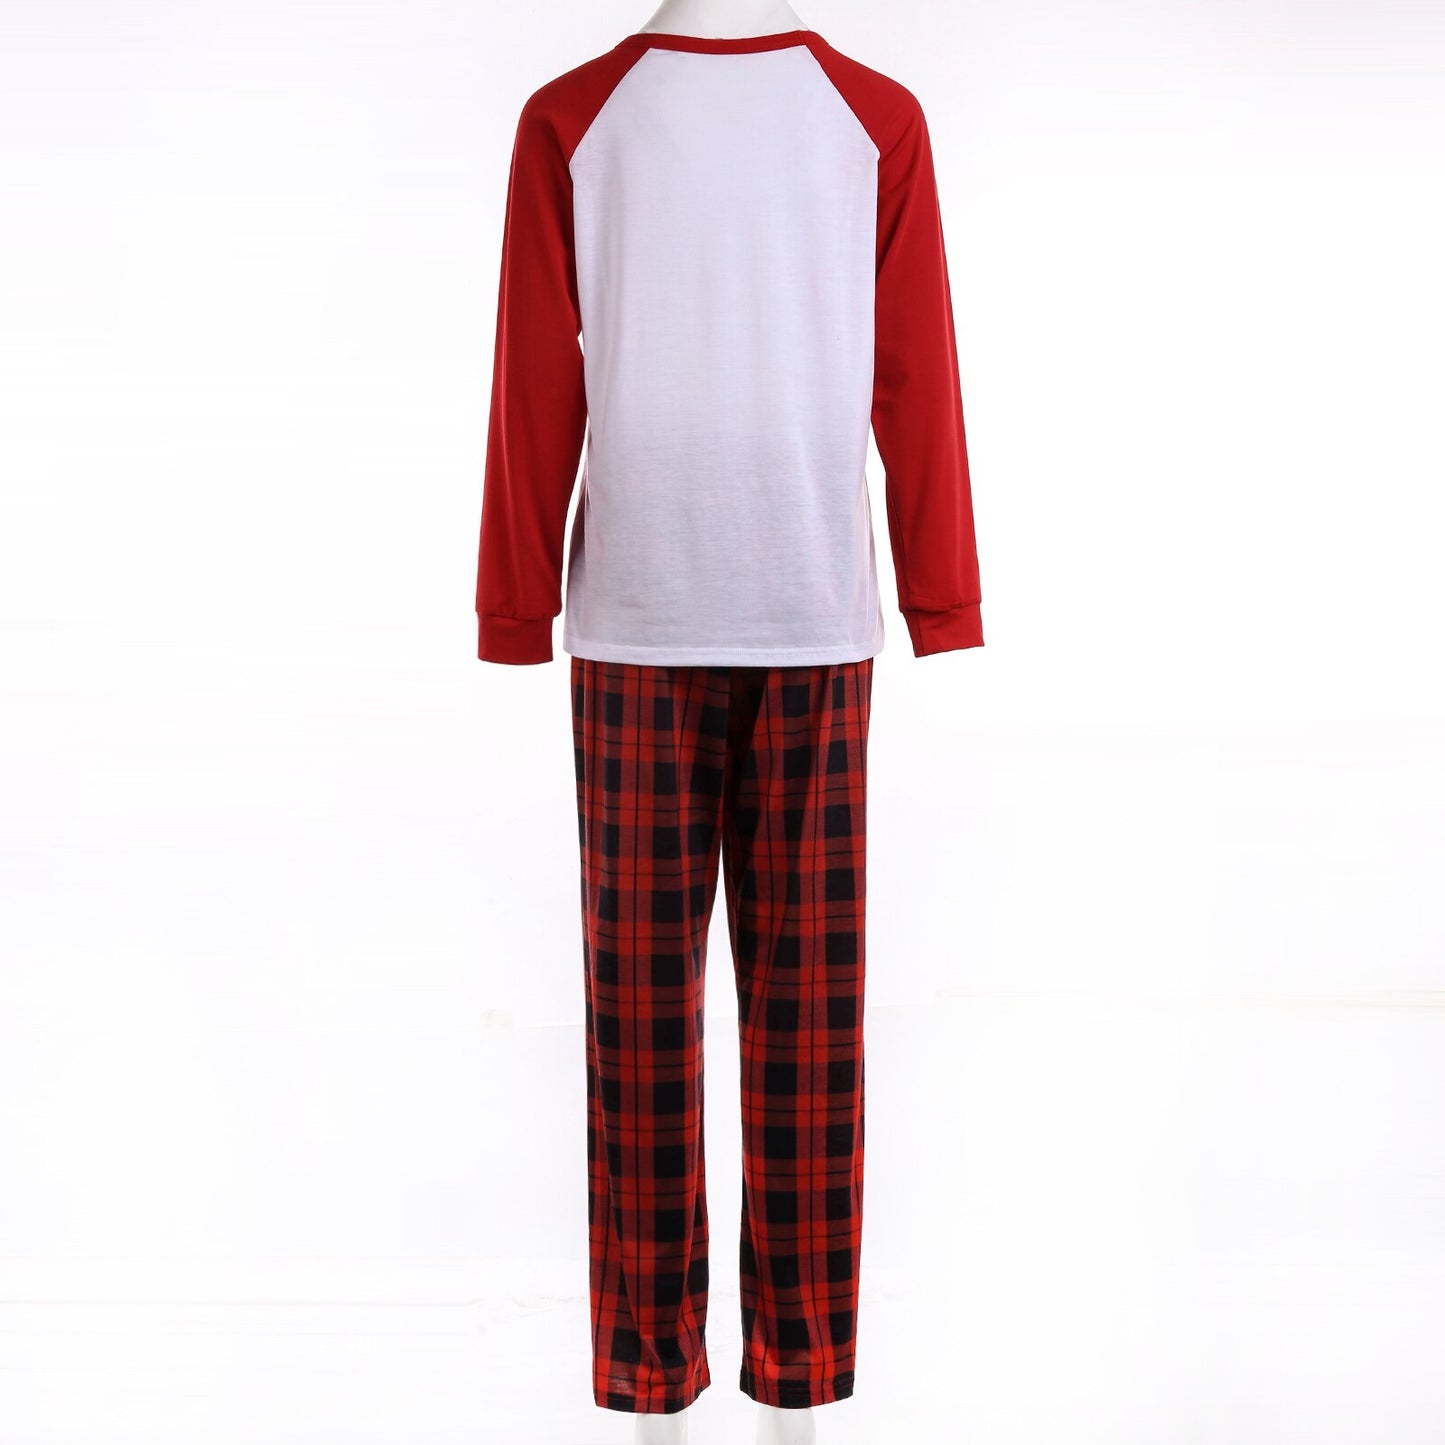 I'm cute Christmas Family Pajama Sets  Adult Kids Pajama and Baby Sleepwear set